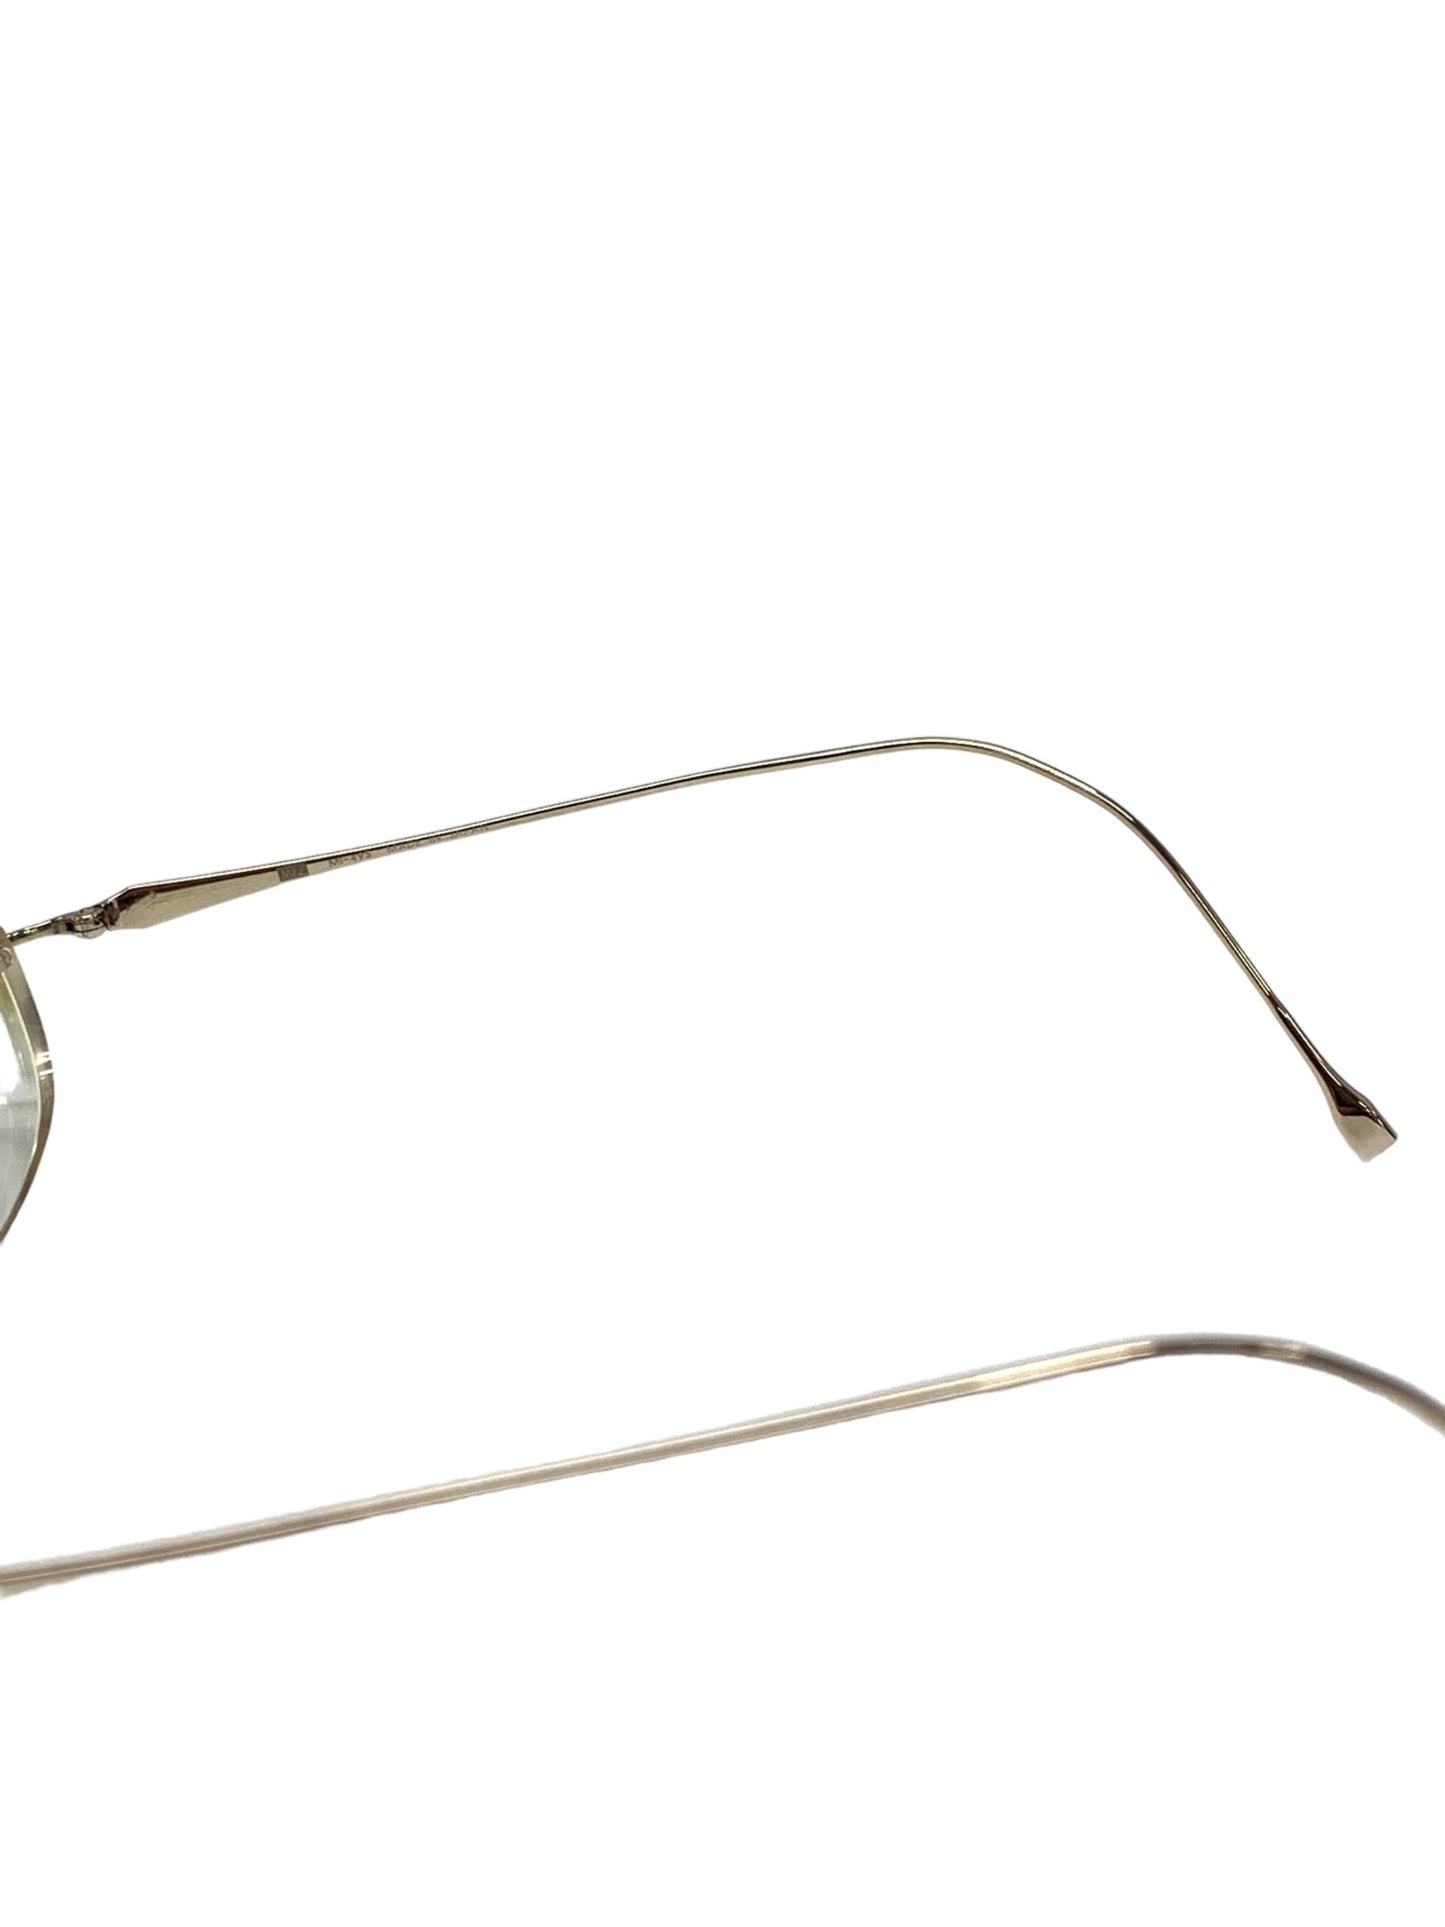 MIZ JAPAN 水島眼鏡 MI-495 眼鏡 シルバー K14WG リムレスフレーム オーバル型 IT4WKIRIFG2S